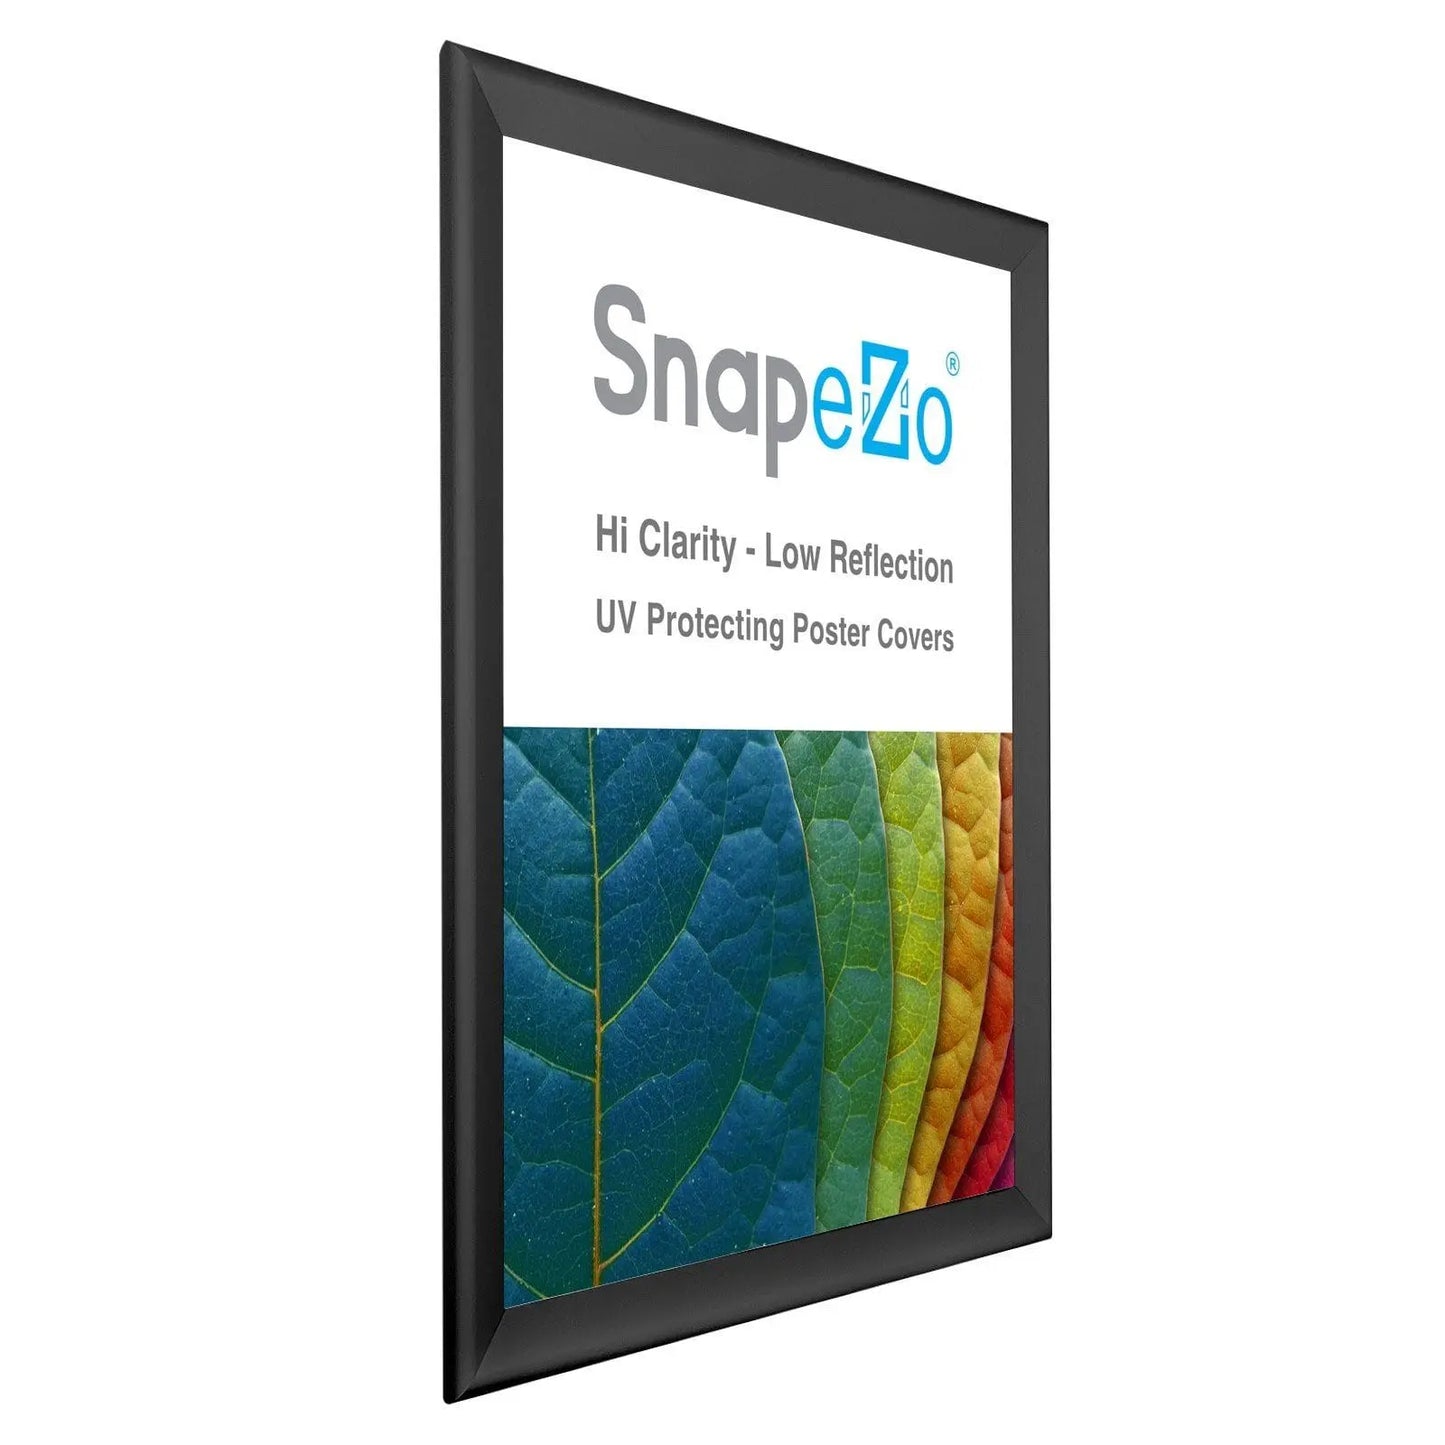 18x24 Black SnapeZo® Snap Frame - 1.7" Profile - Snap Frames Direct